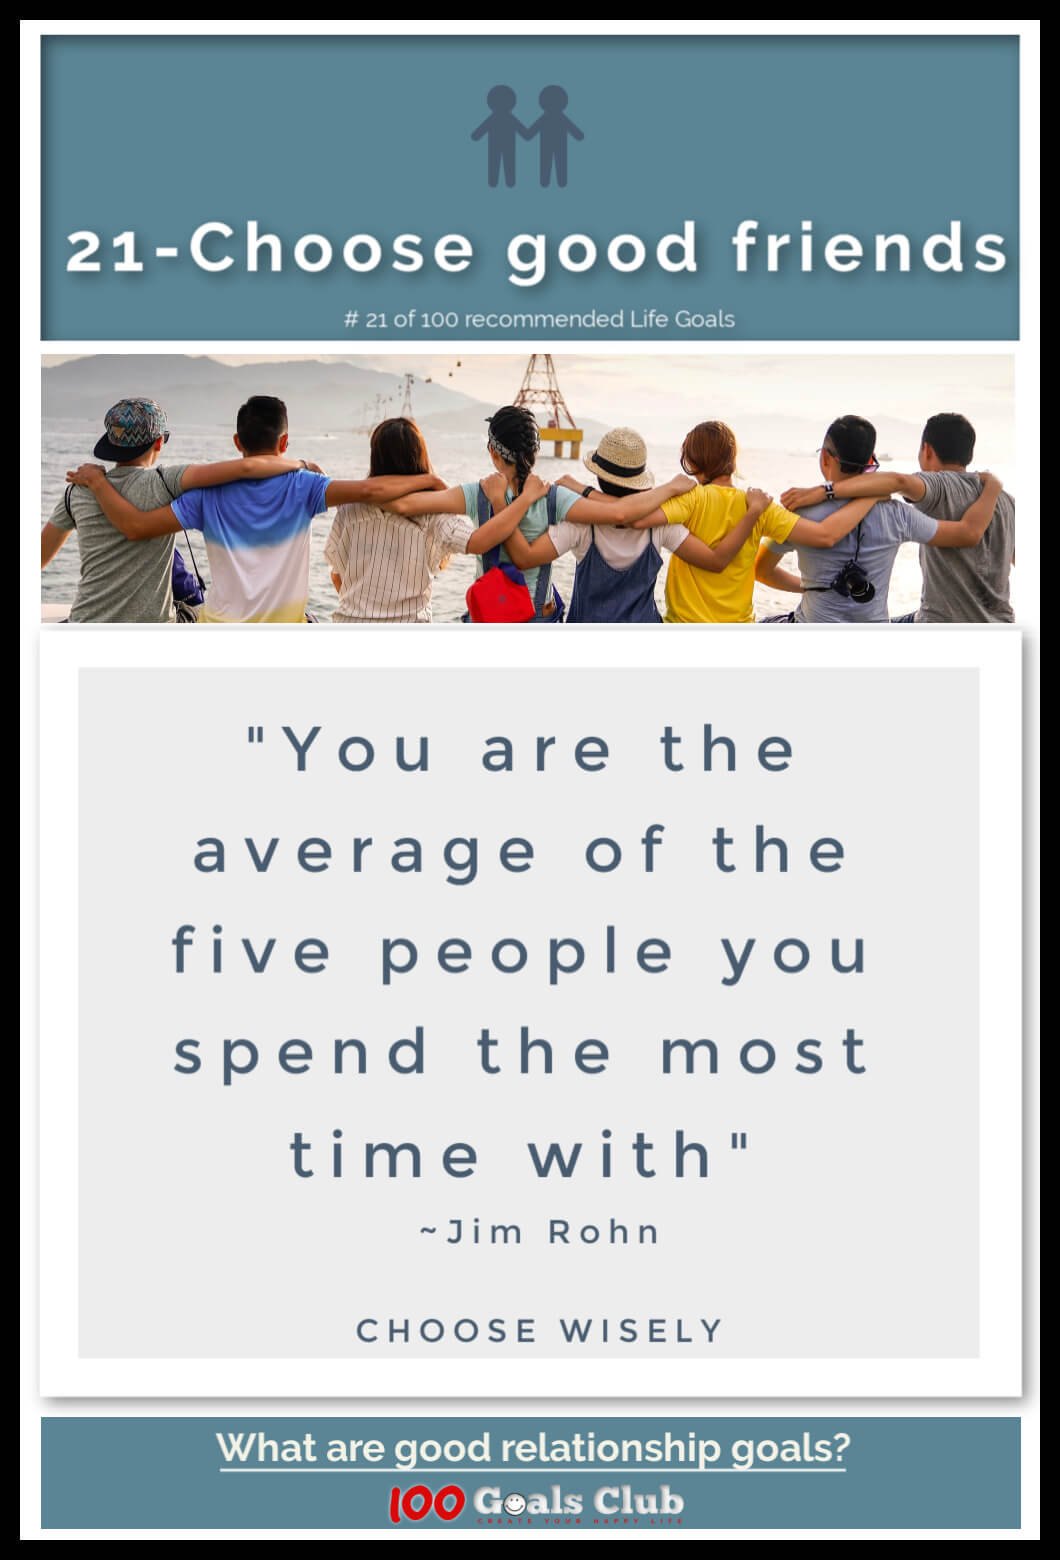 Relationship goals and choosing good friends!